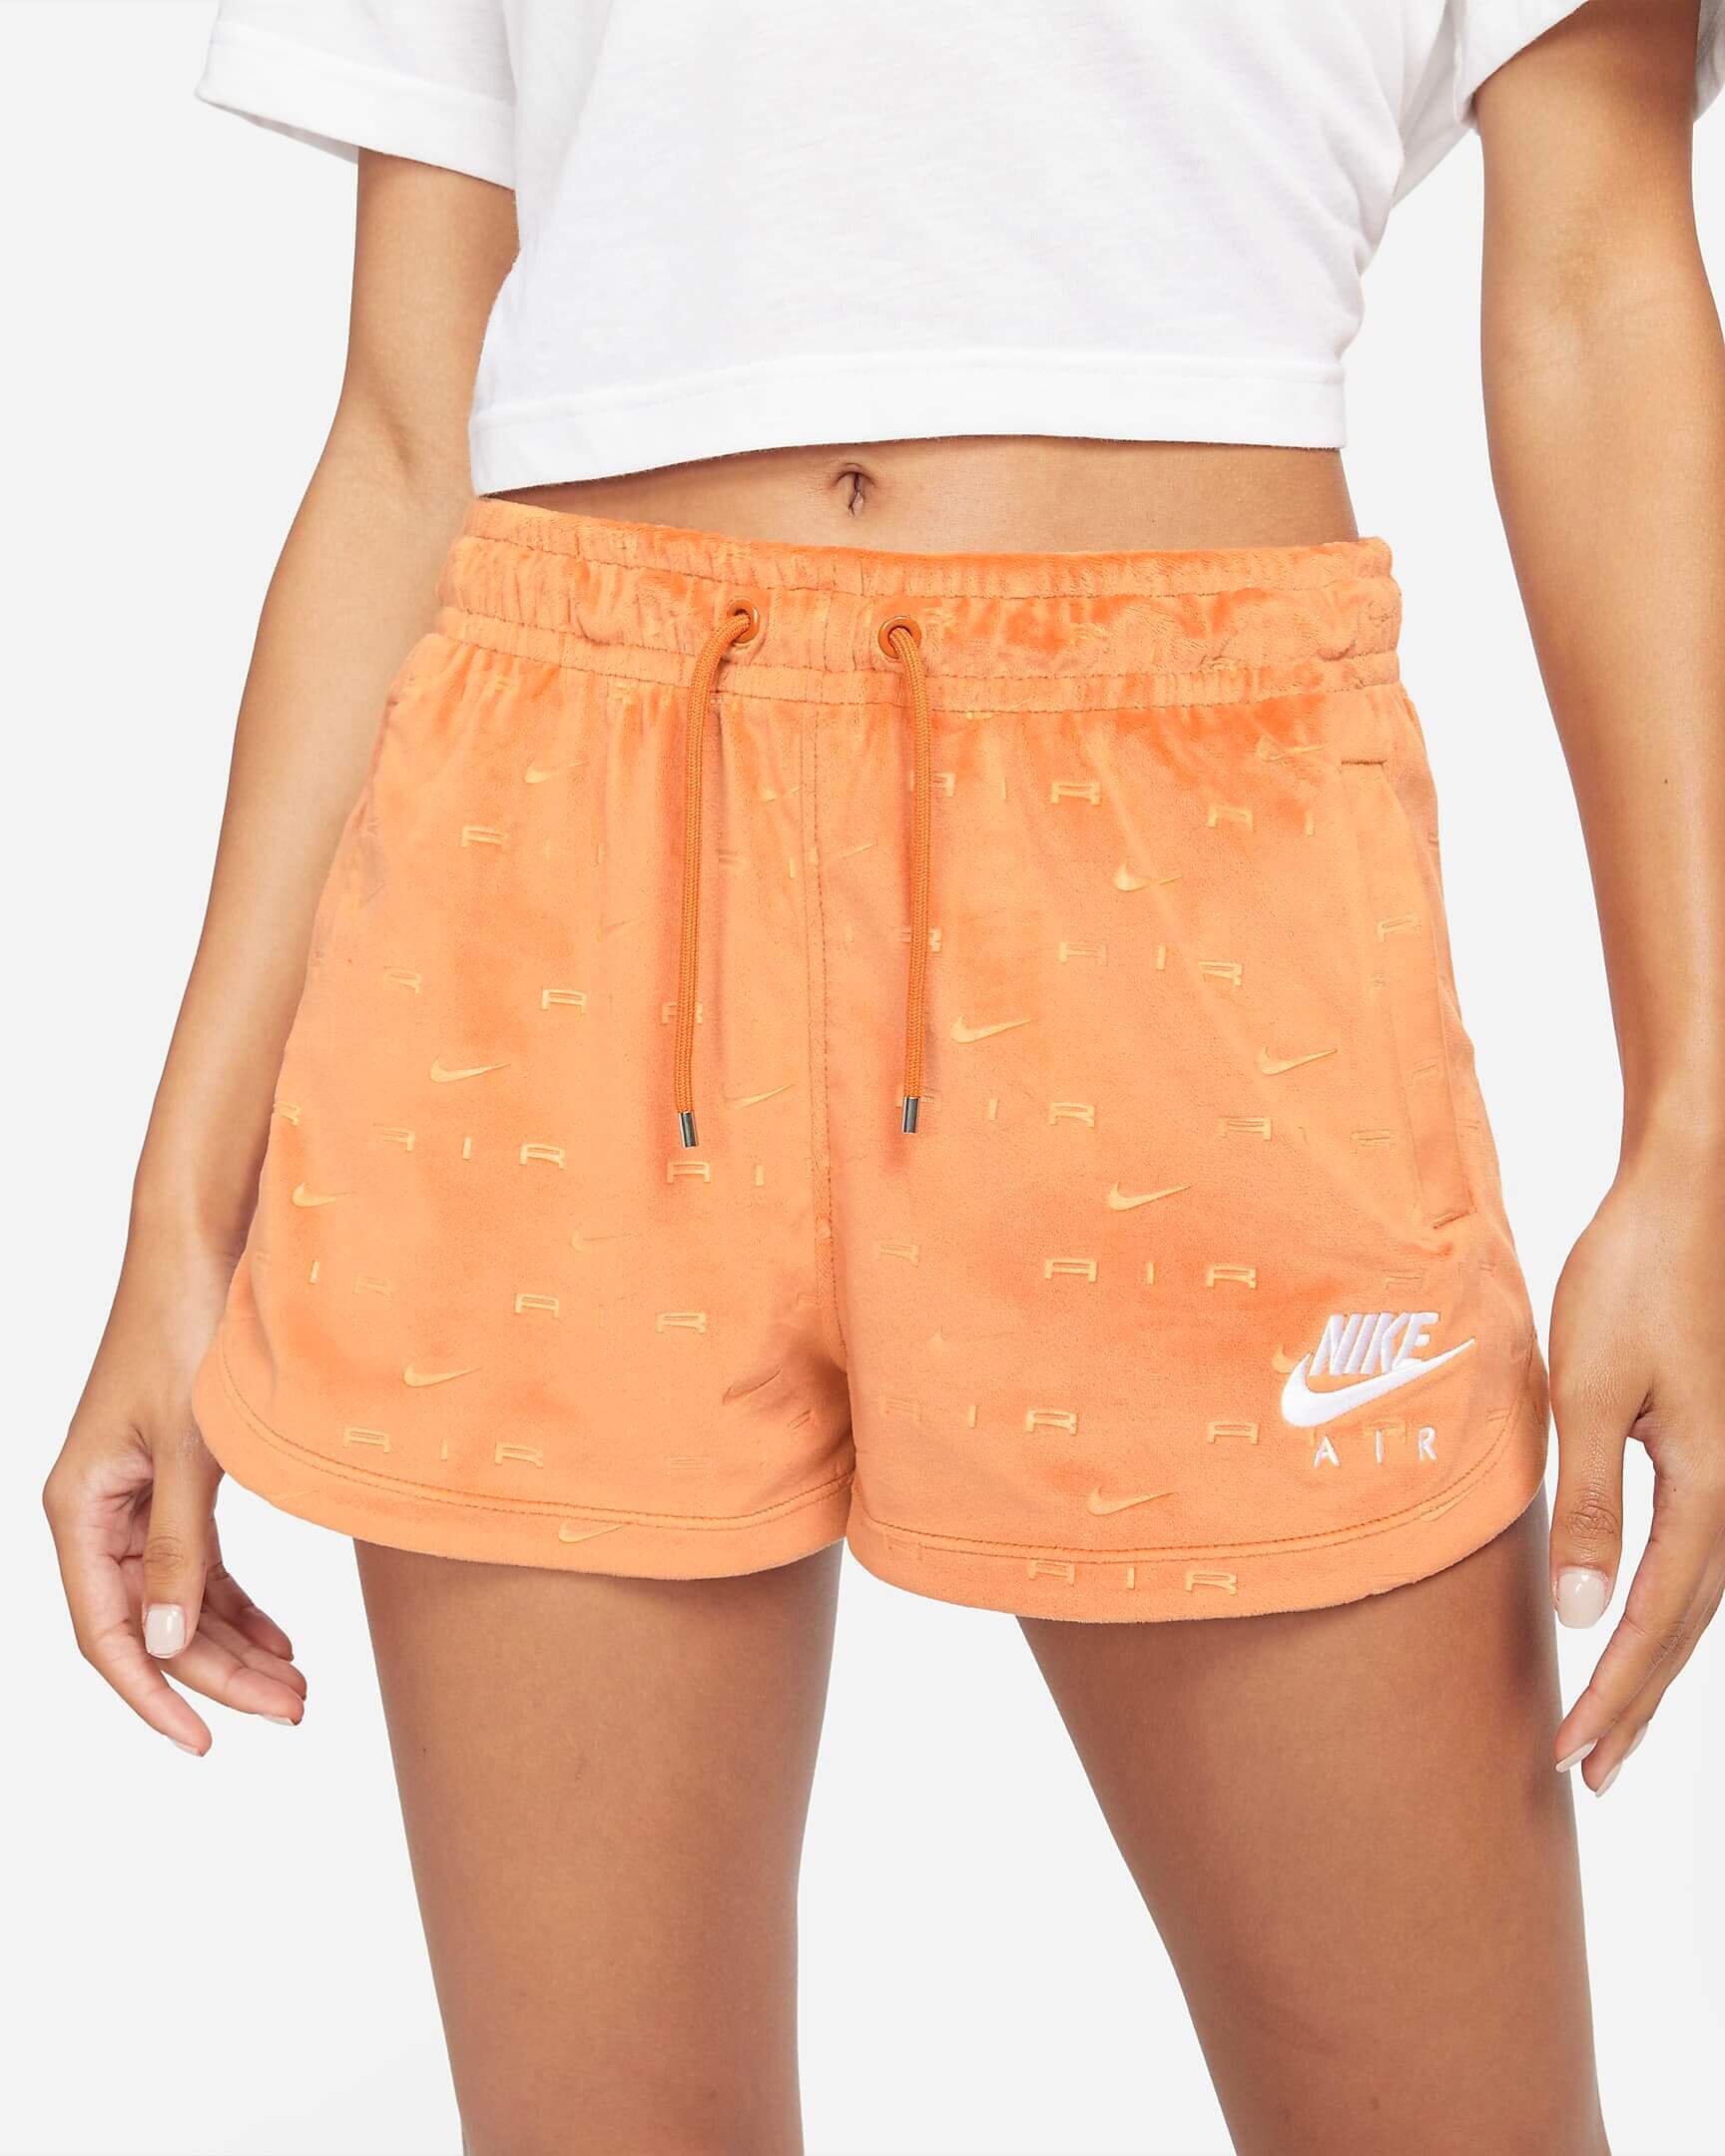 CNK-Nike-womens-velour-shorts-sport-spice.jpeg